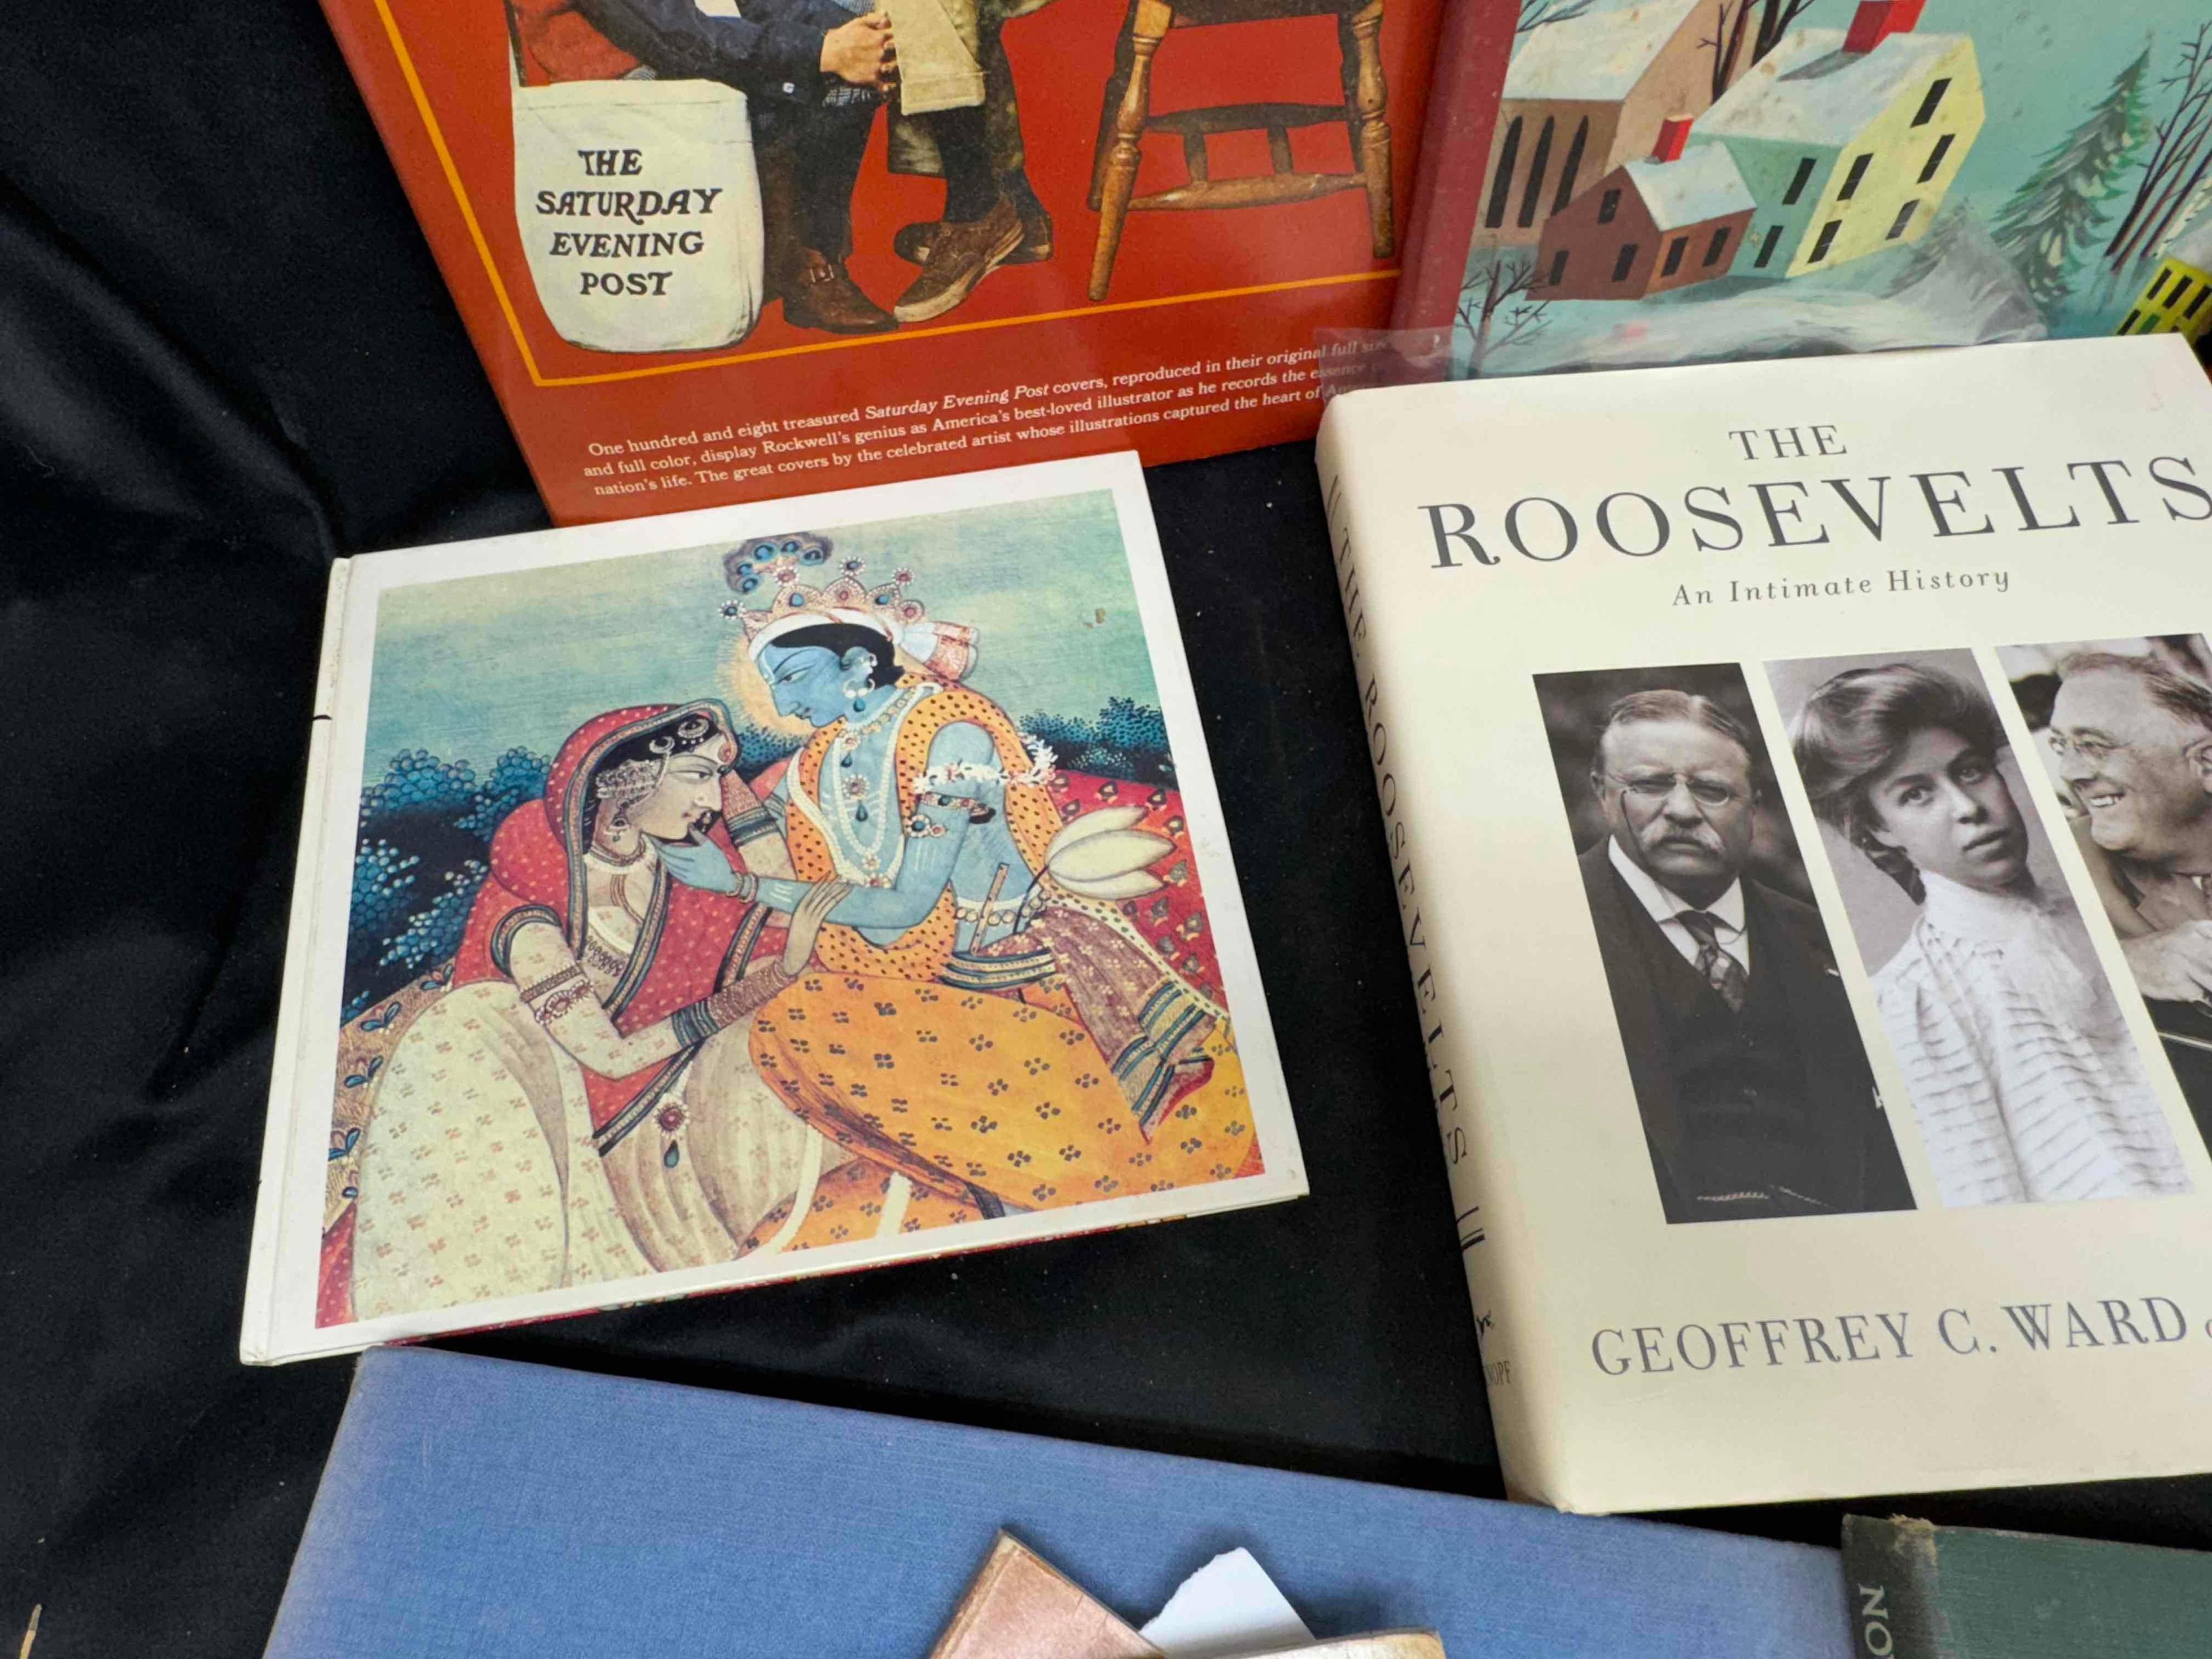 Assorted Books. Monet, Treasure Island, Norman Rockwell more